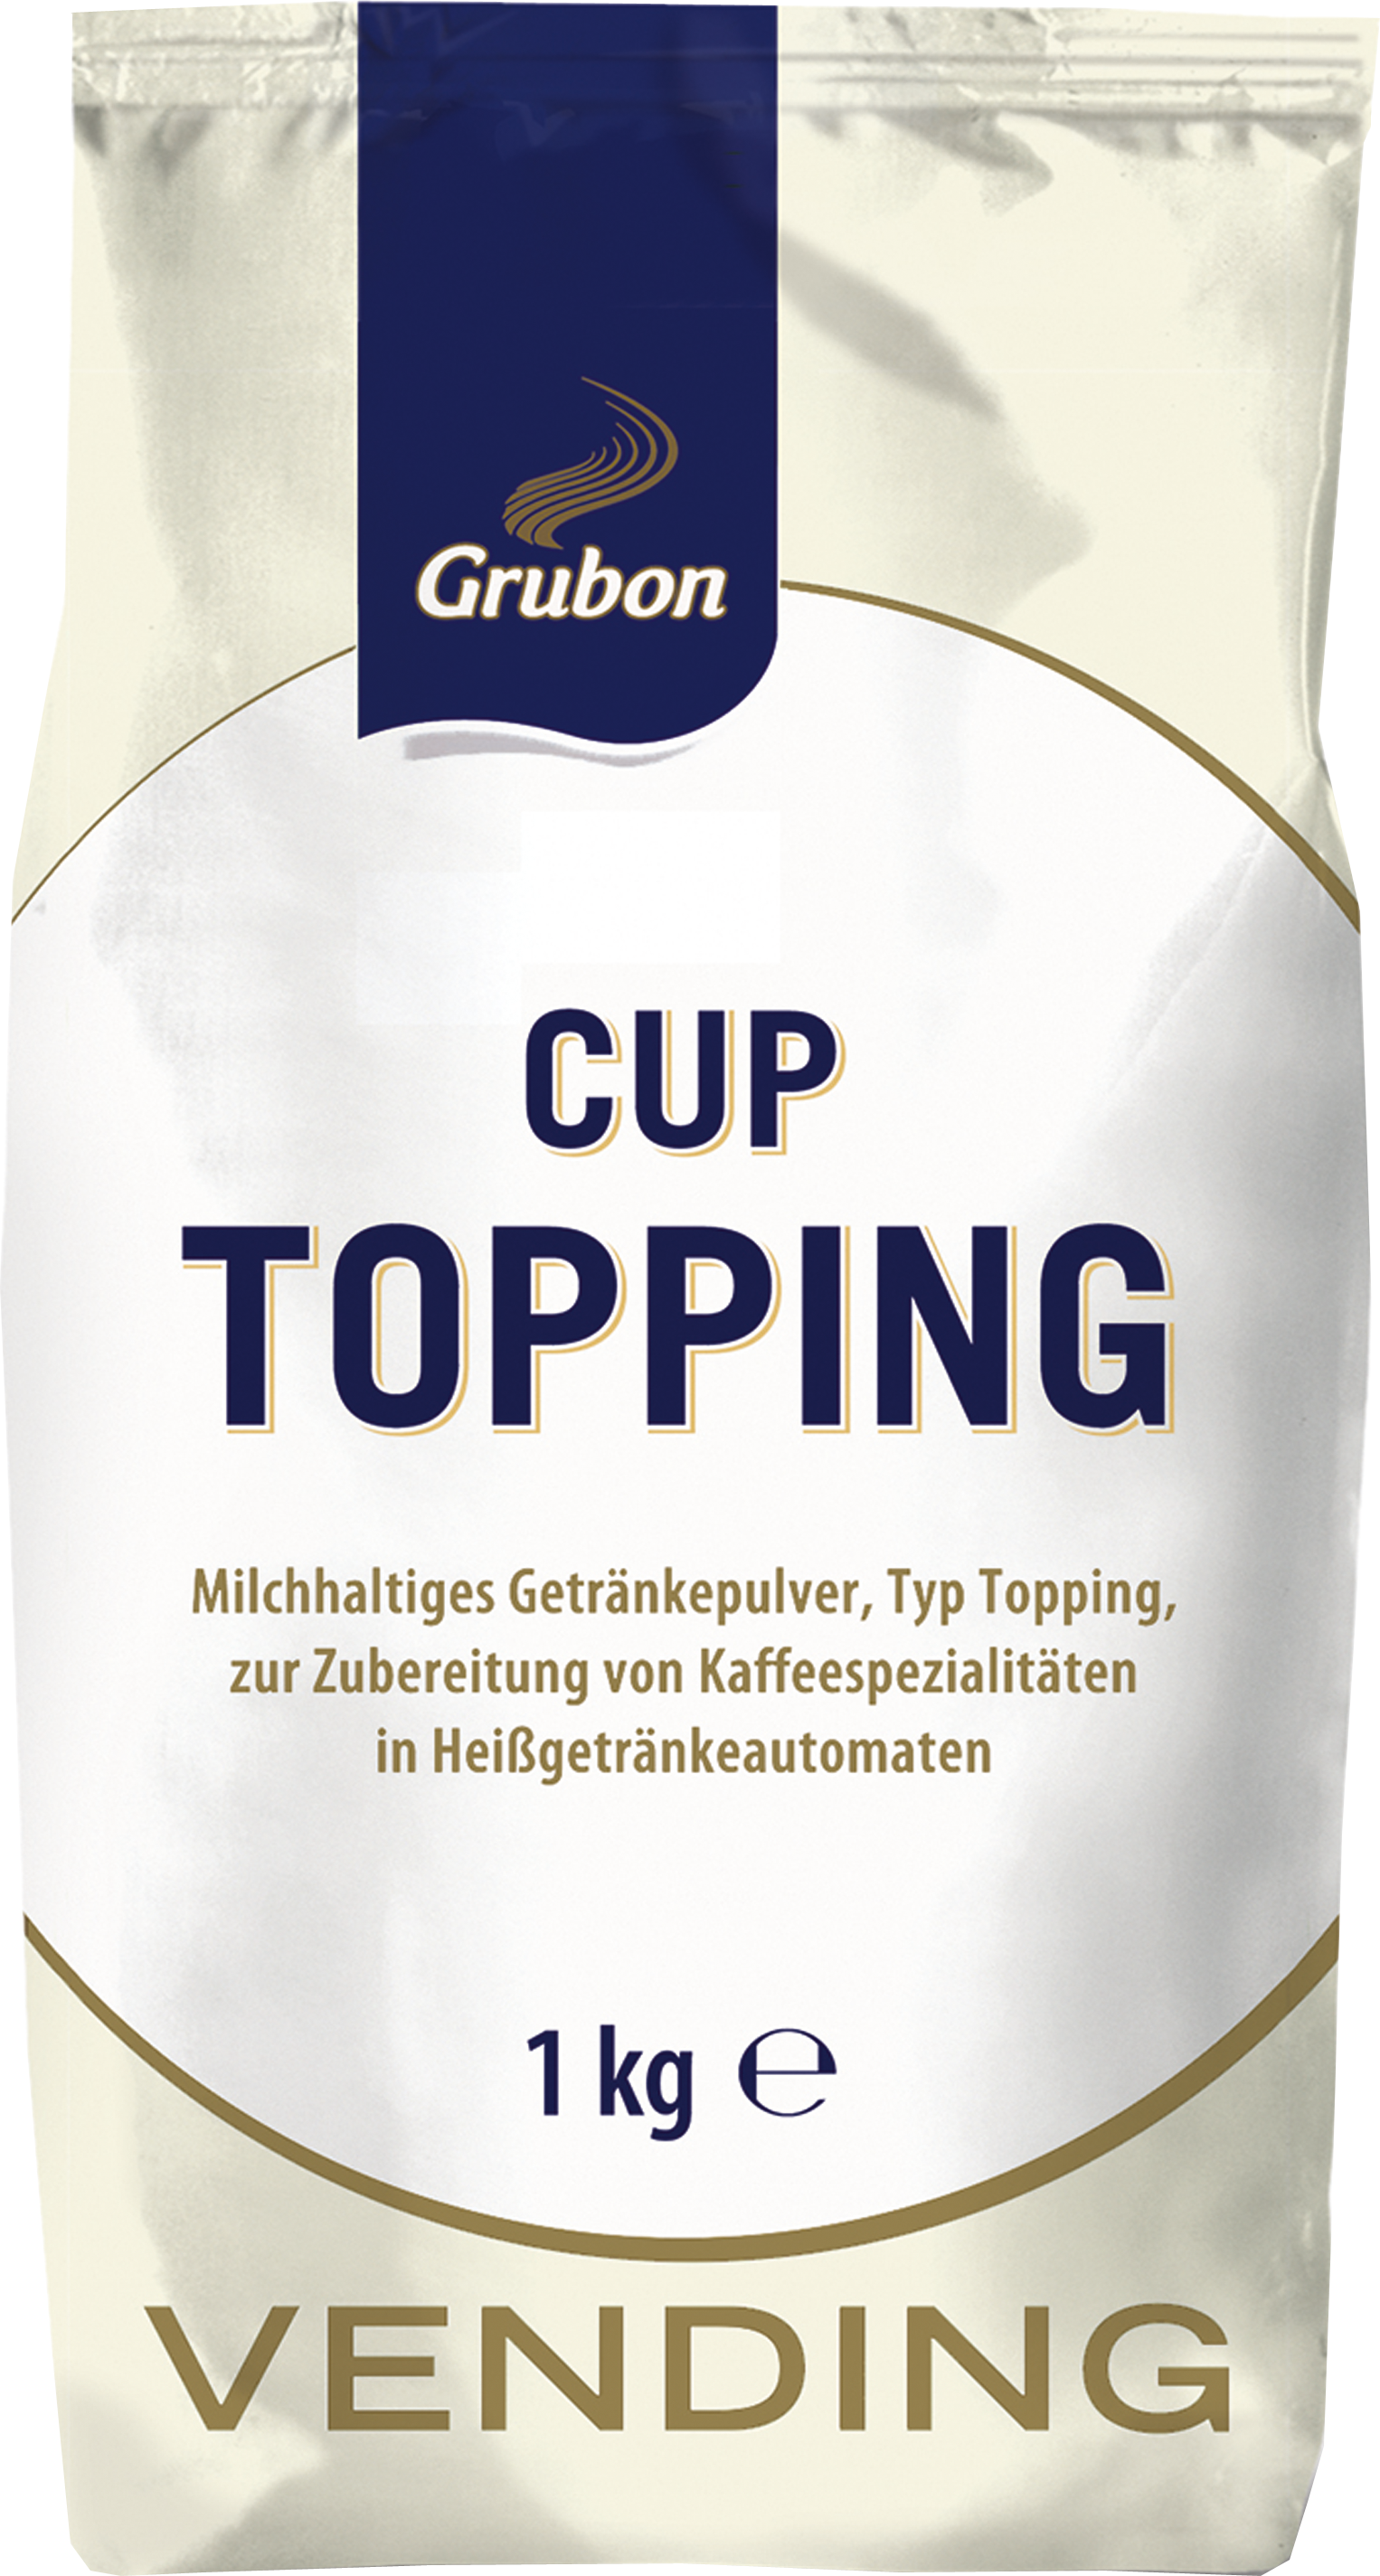 Grubon Cup Topping